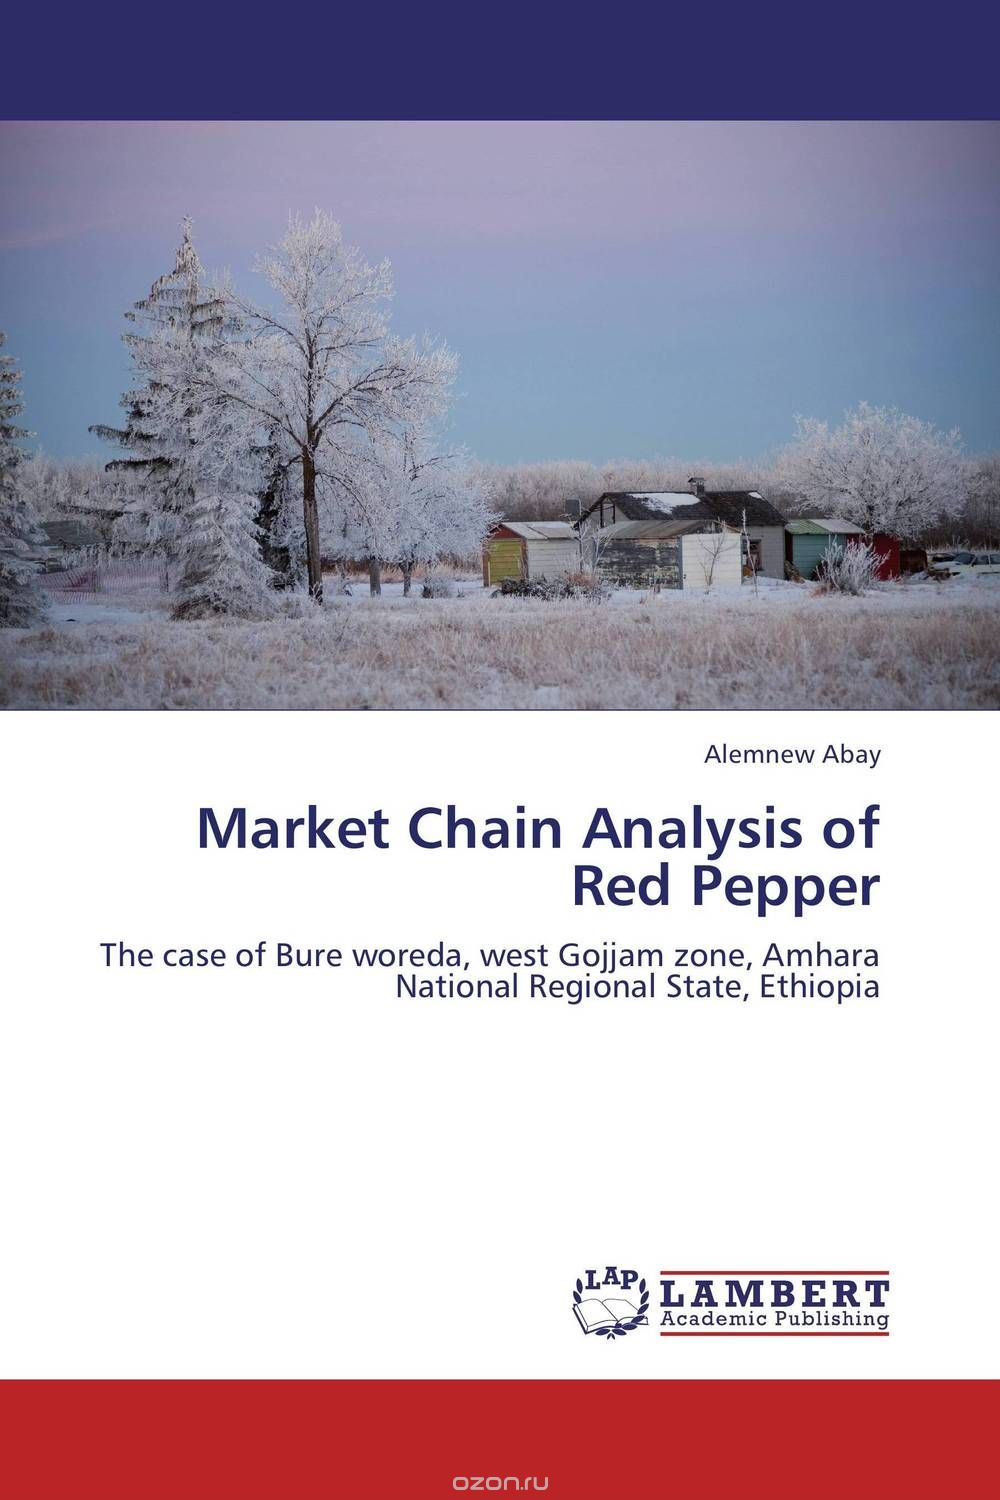 Скачать книгу "Market Chain Analysis of Red Pepper"